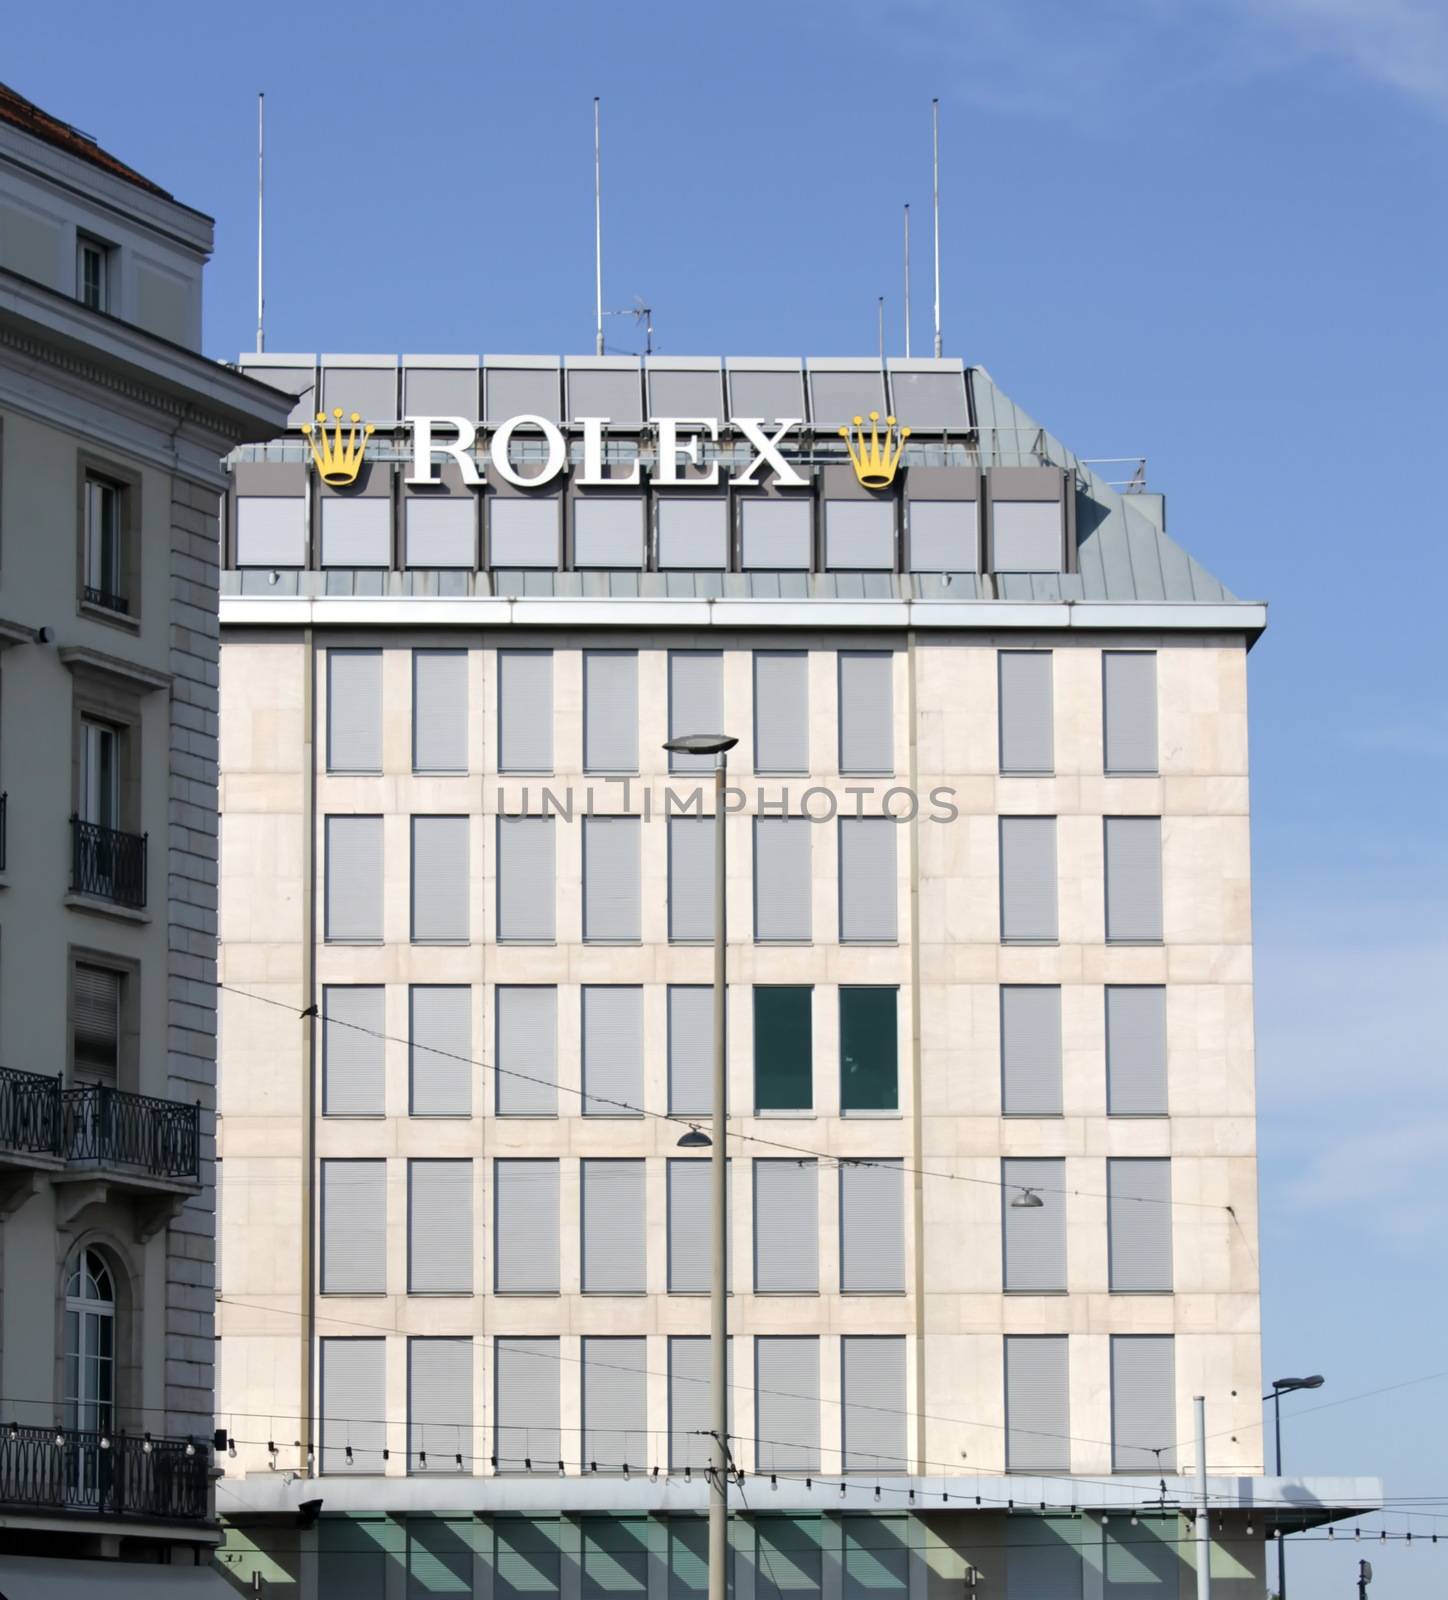 Rolex building, Geneva, Switzerland by Elenaphotos21